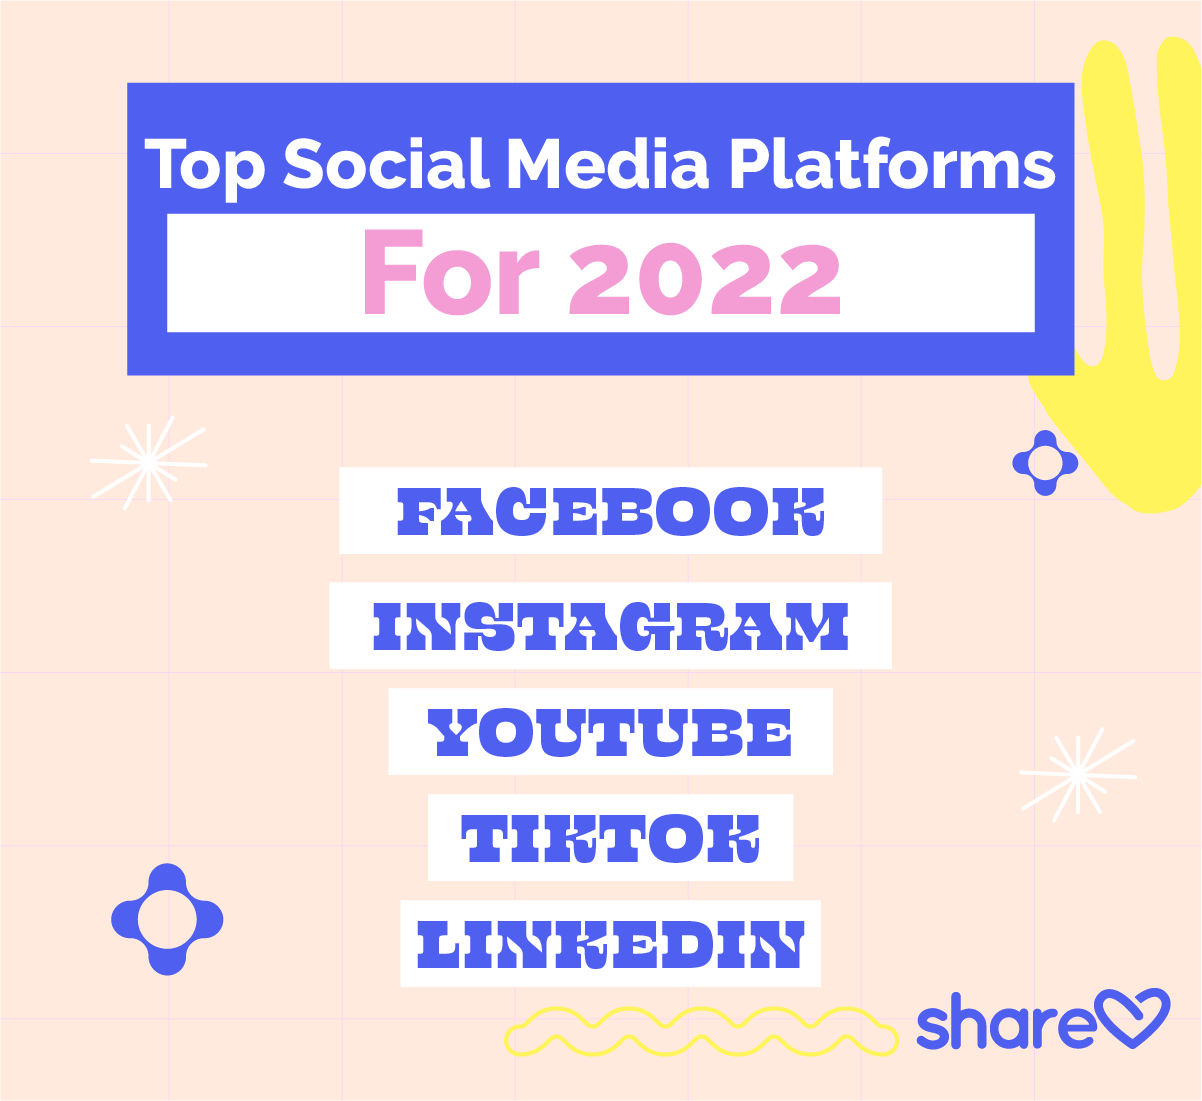 Top Social Media Platforms For 2022